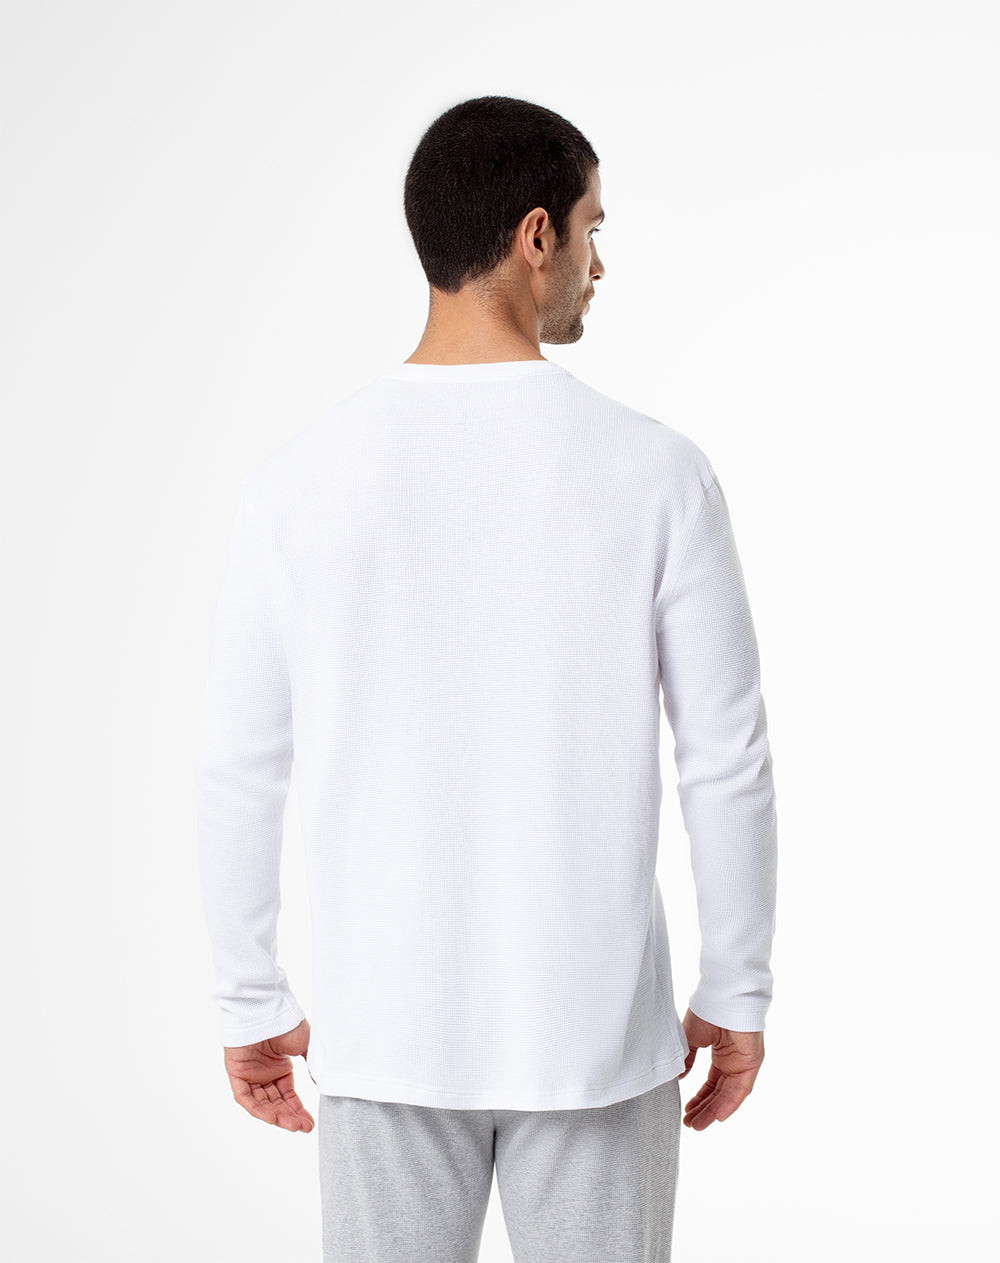 Camiseta relaxed fit manga larga blanca